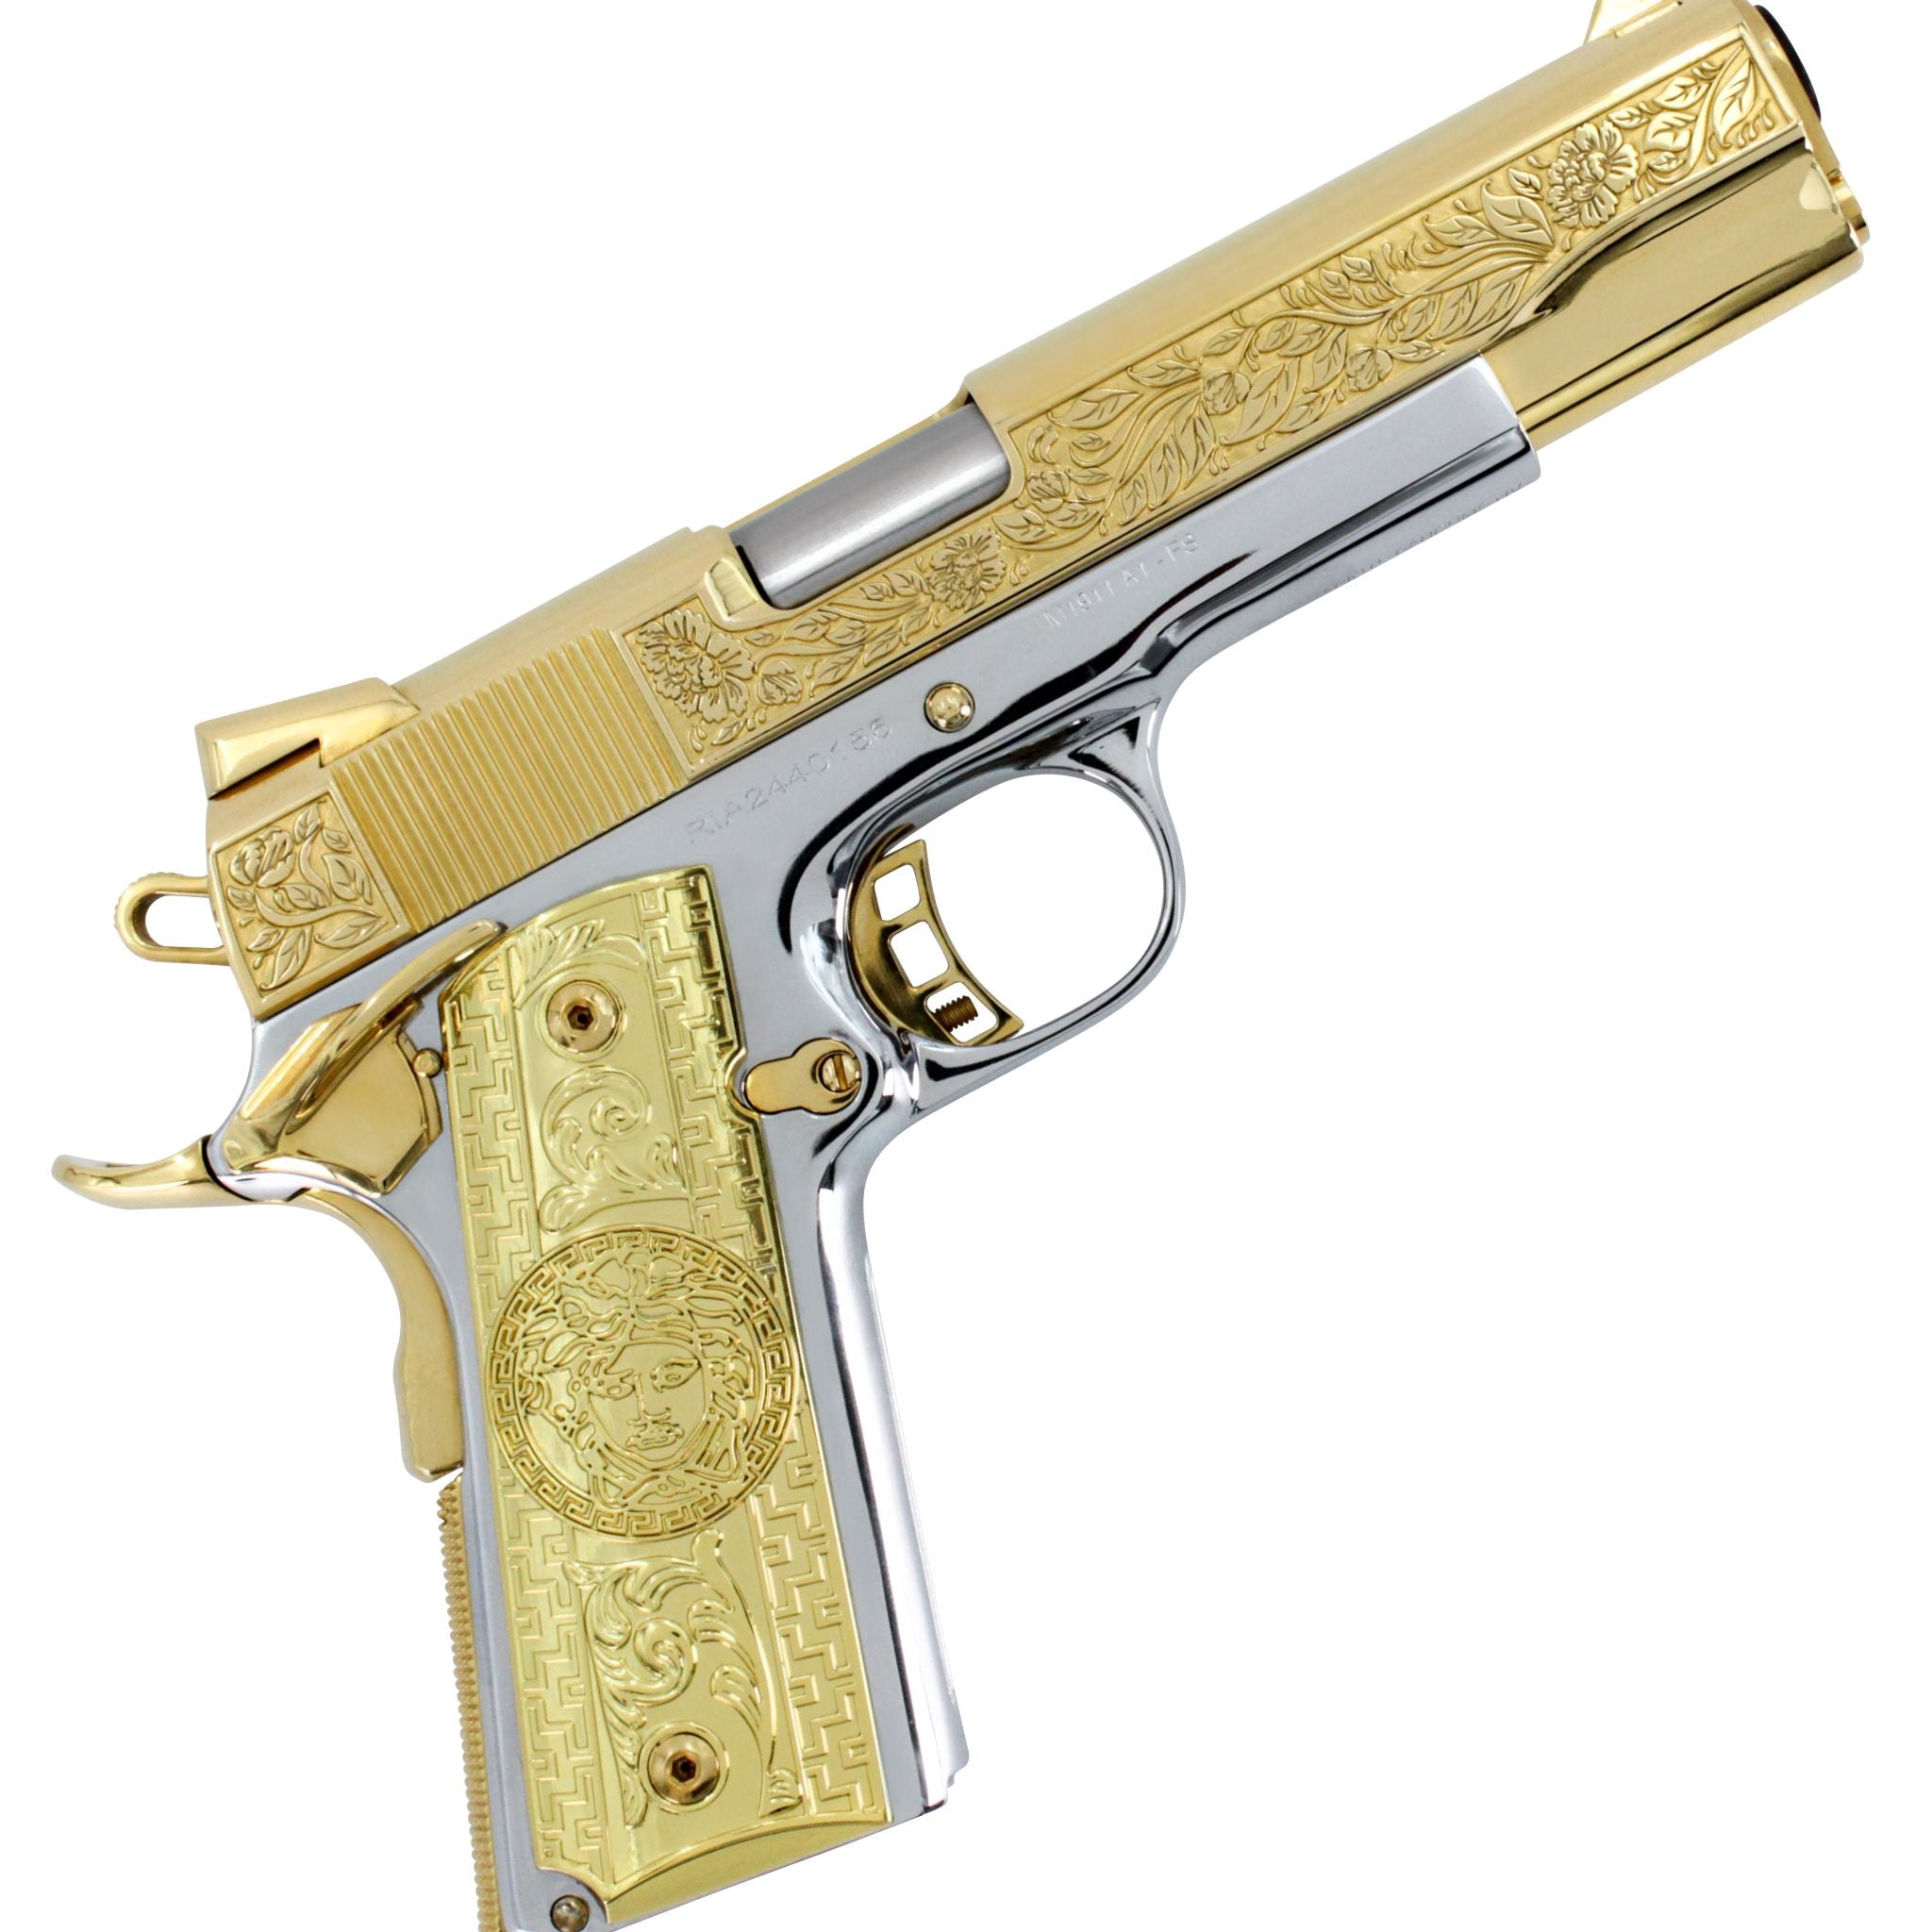 Rock Island 1911, 45 ACP, Italian Renaissance, 24K Gold Plated Slide & Accents with High Polished White Chrome Frame, SKU: 6595861872742, 24 karat gold gun, 24 Karat Gold Firearm, California compliant handguns